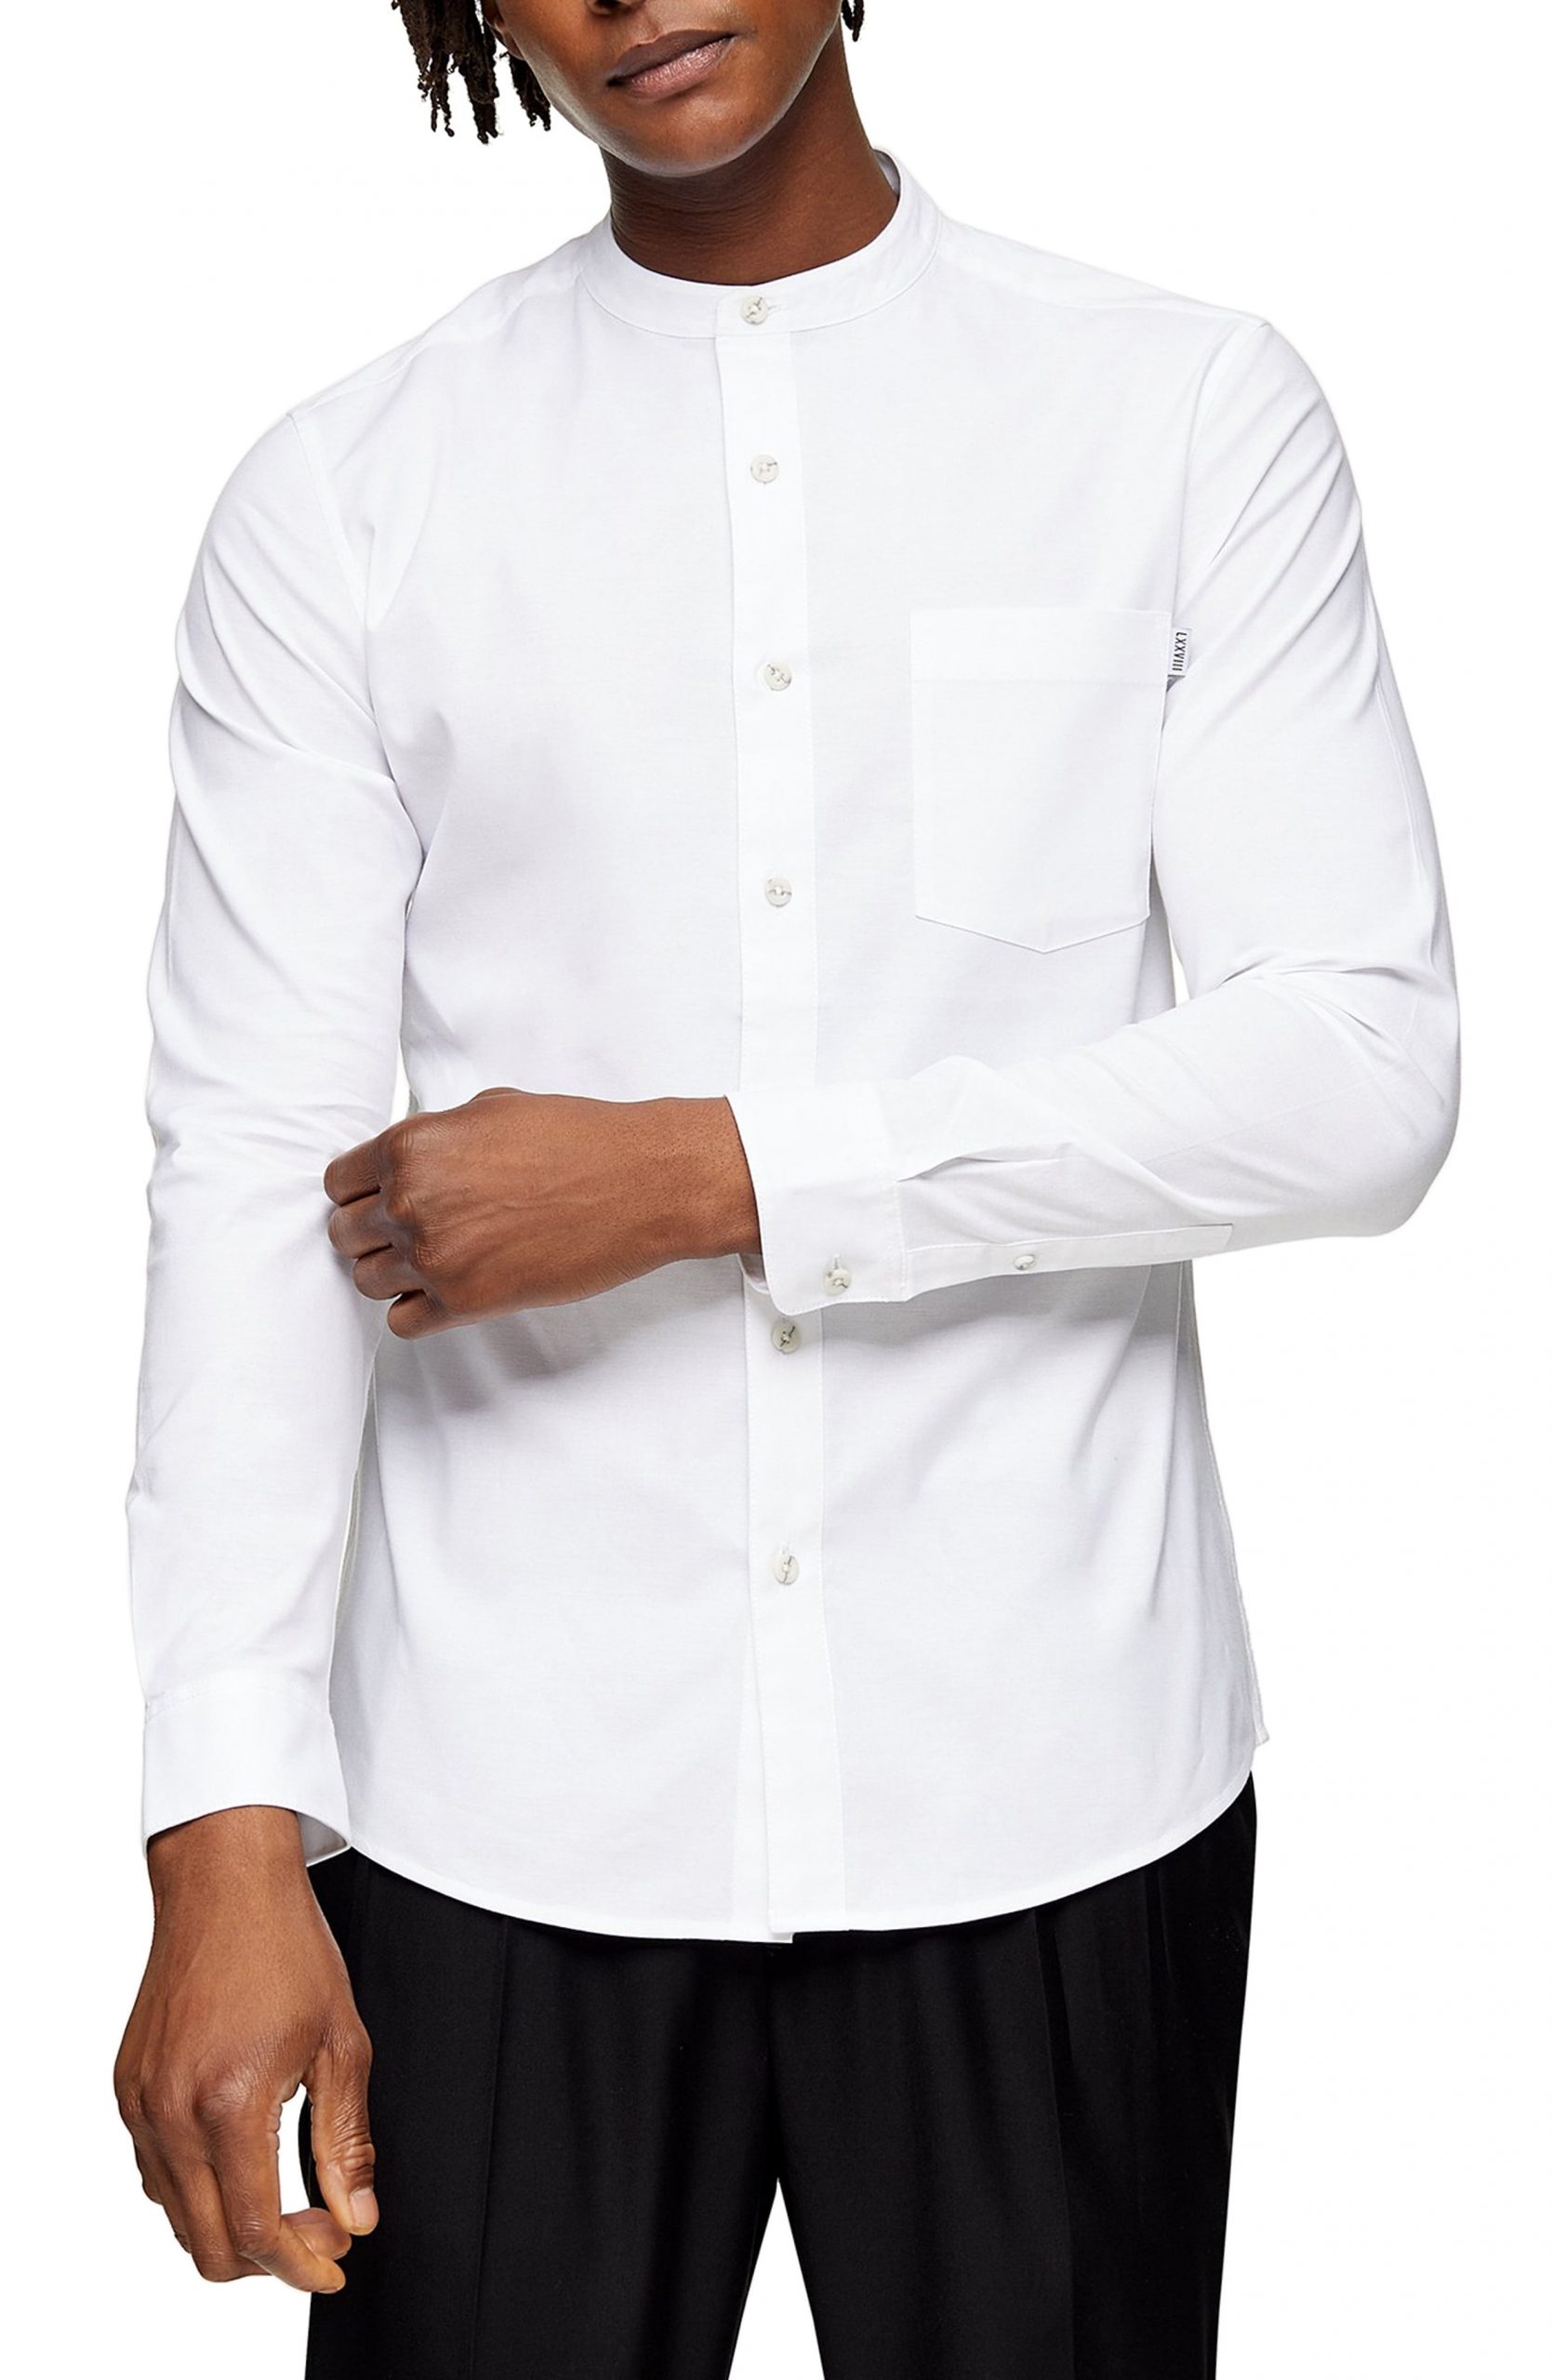 white button up oxford shirt